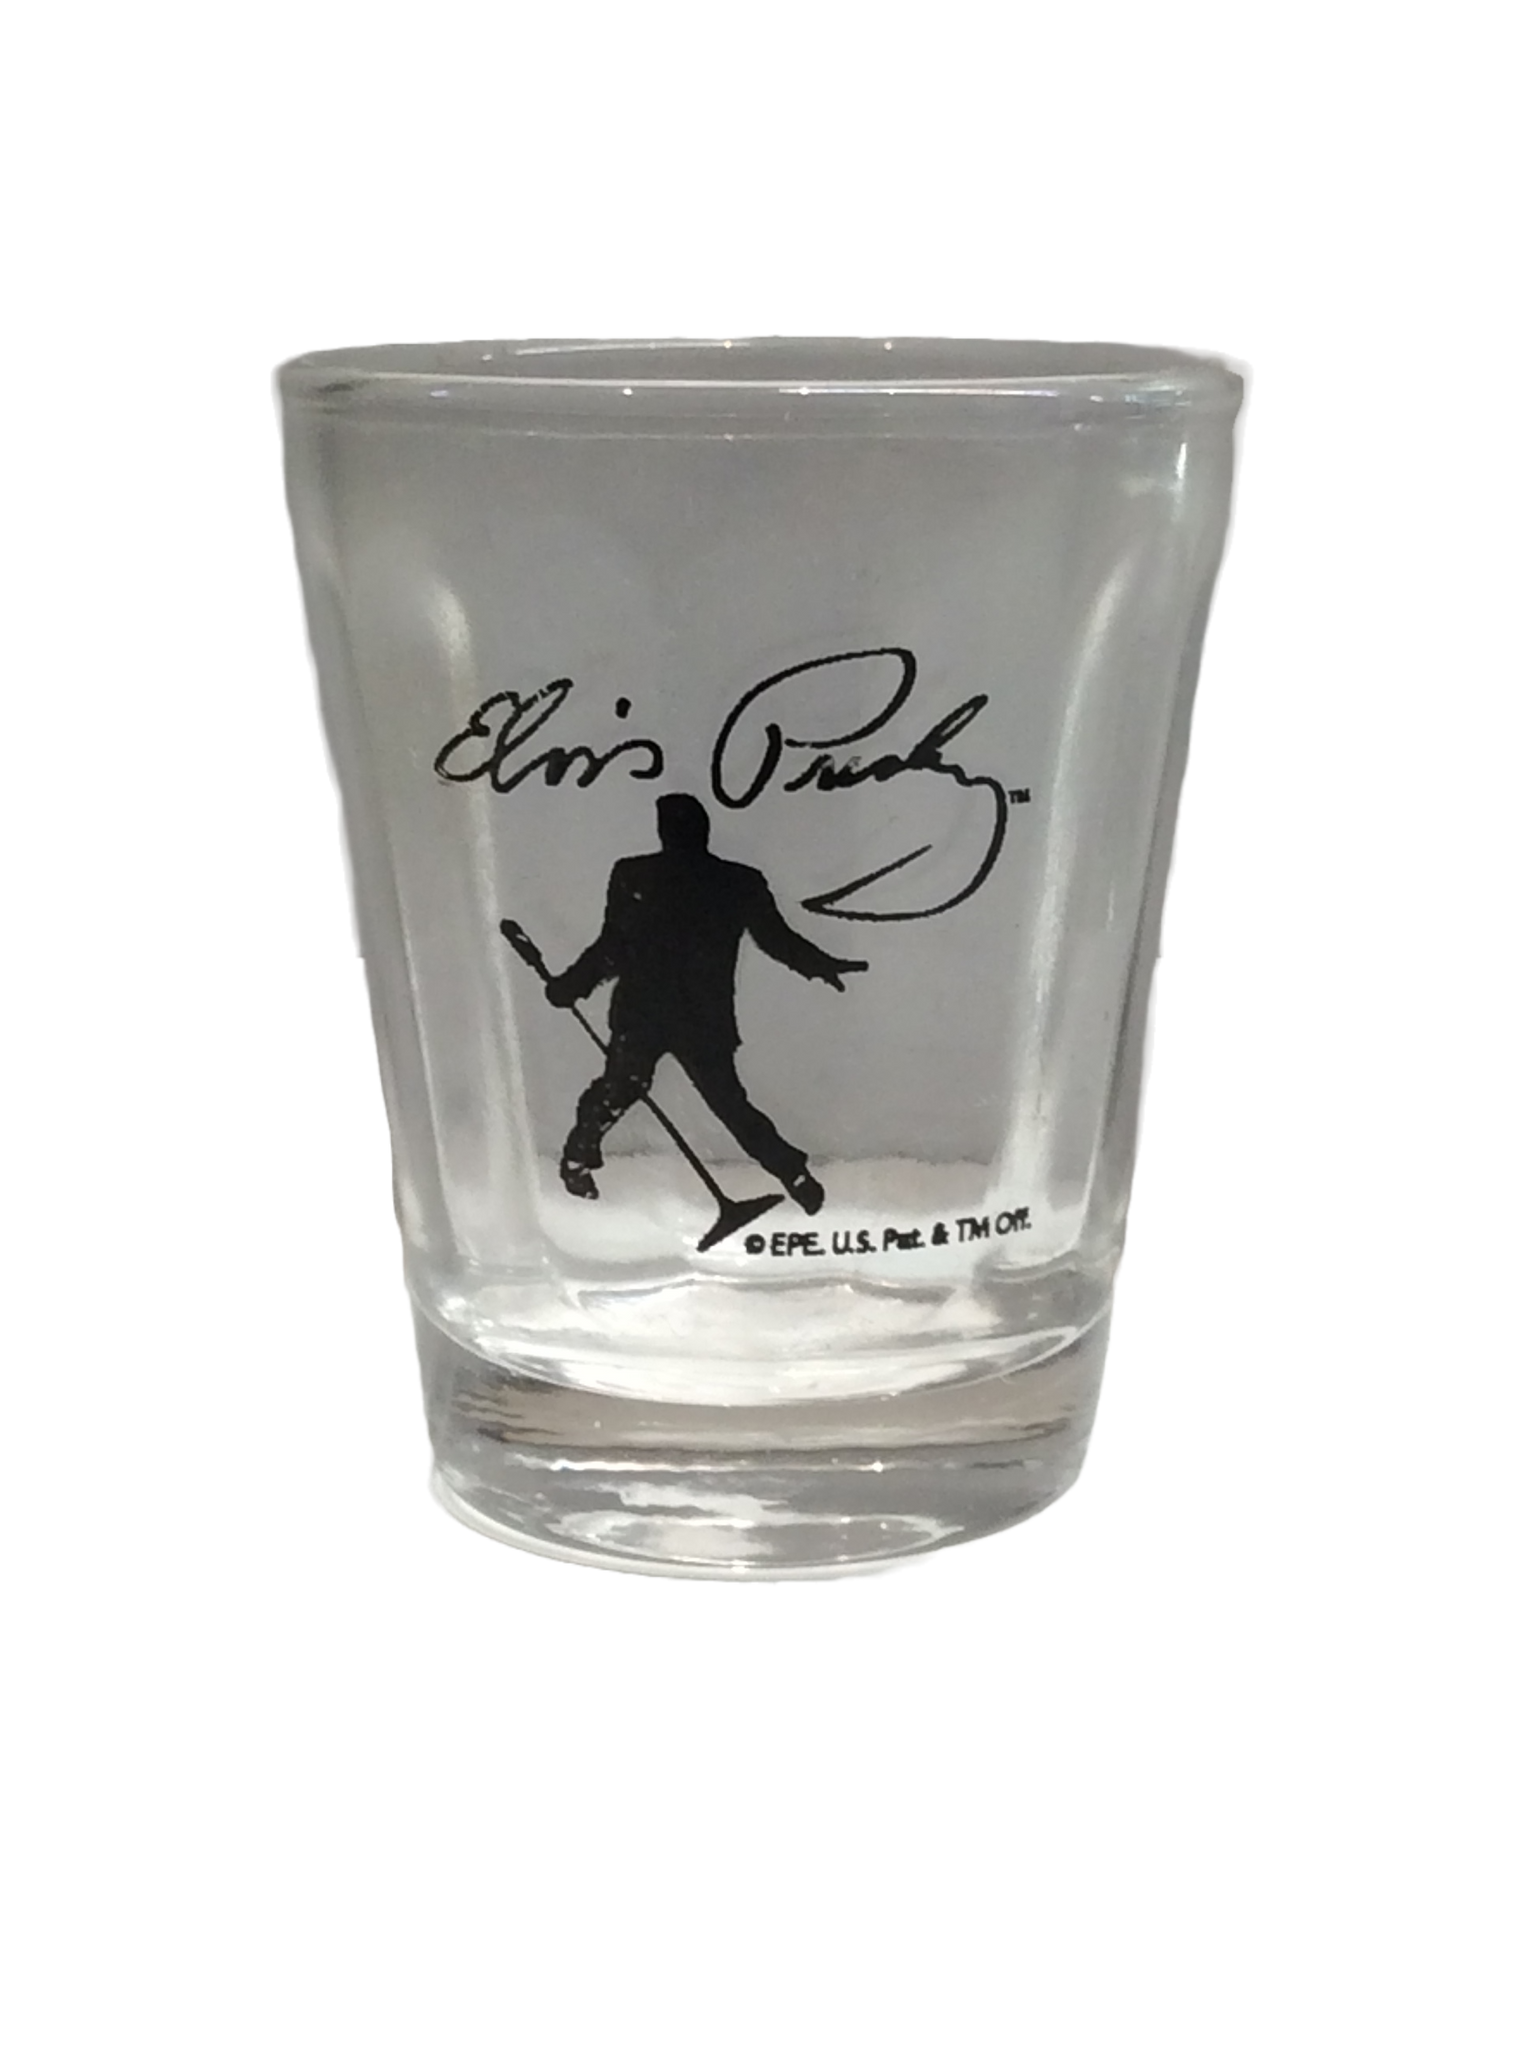 Shot Glass Elvis optic with Signature